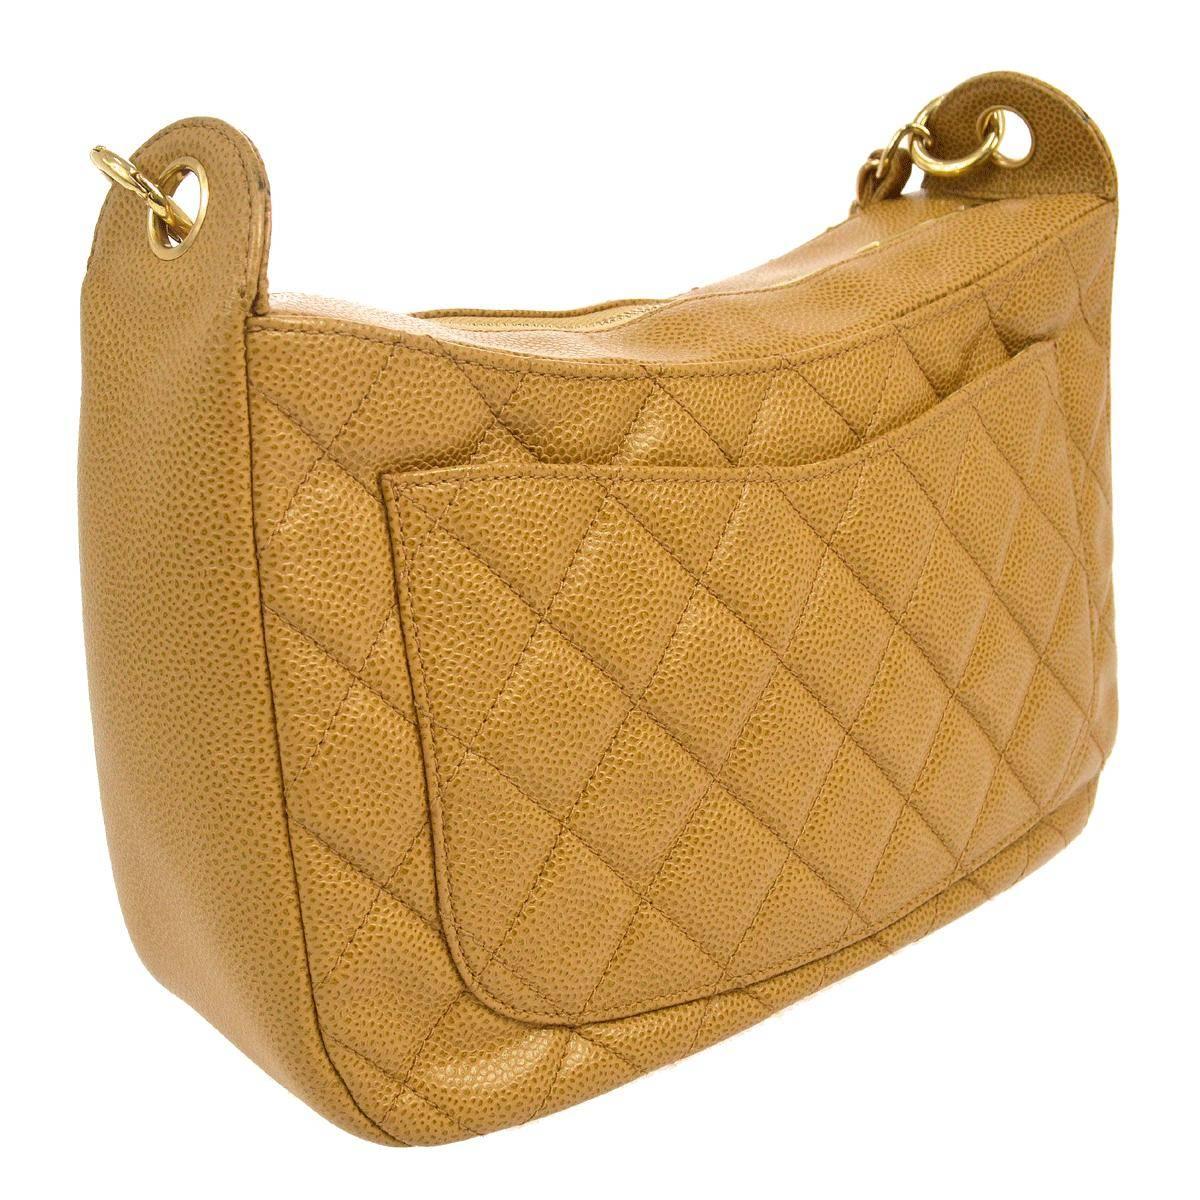 Women's Chanel Nude Caviar Leather Gold Evening Top Handle Satchel Chain Shoulder Bag